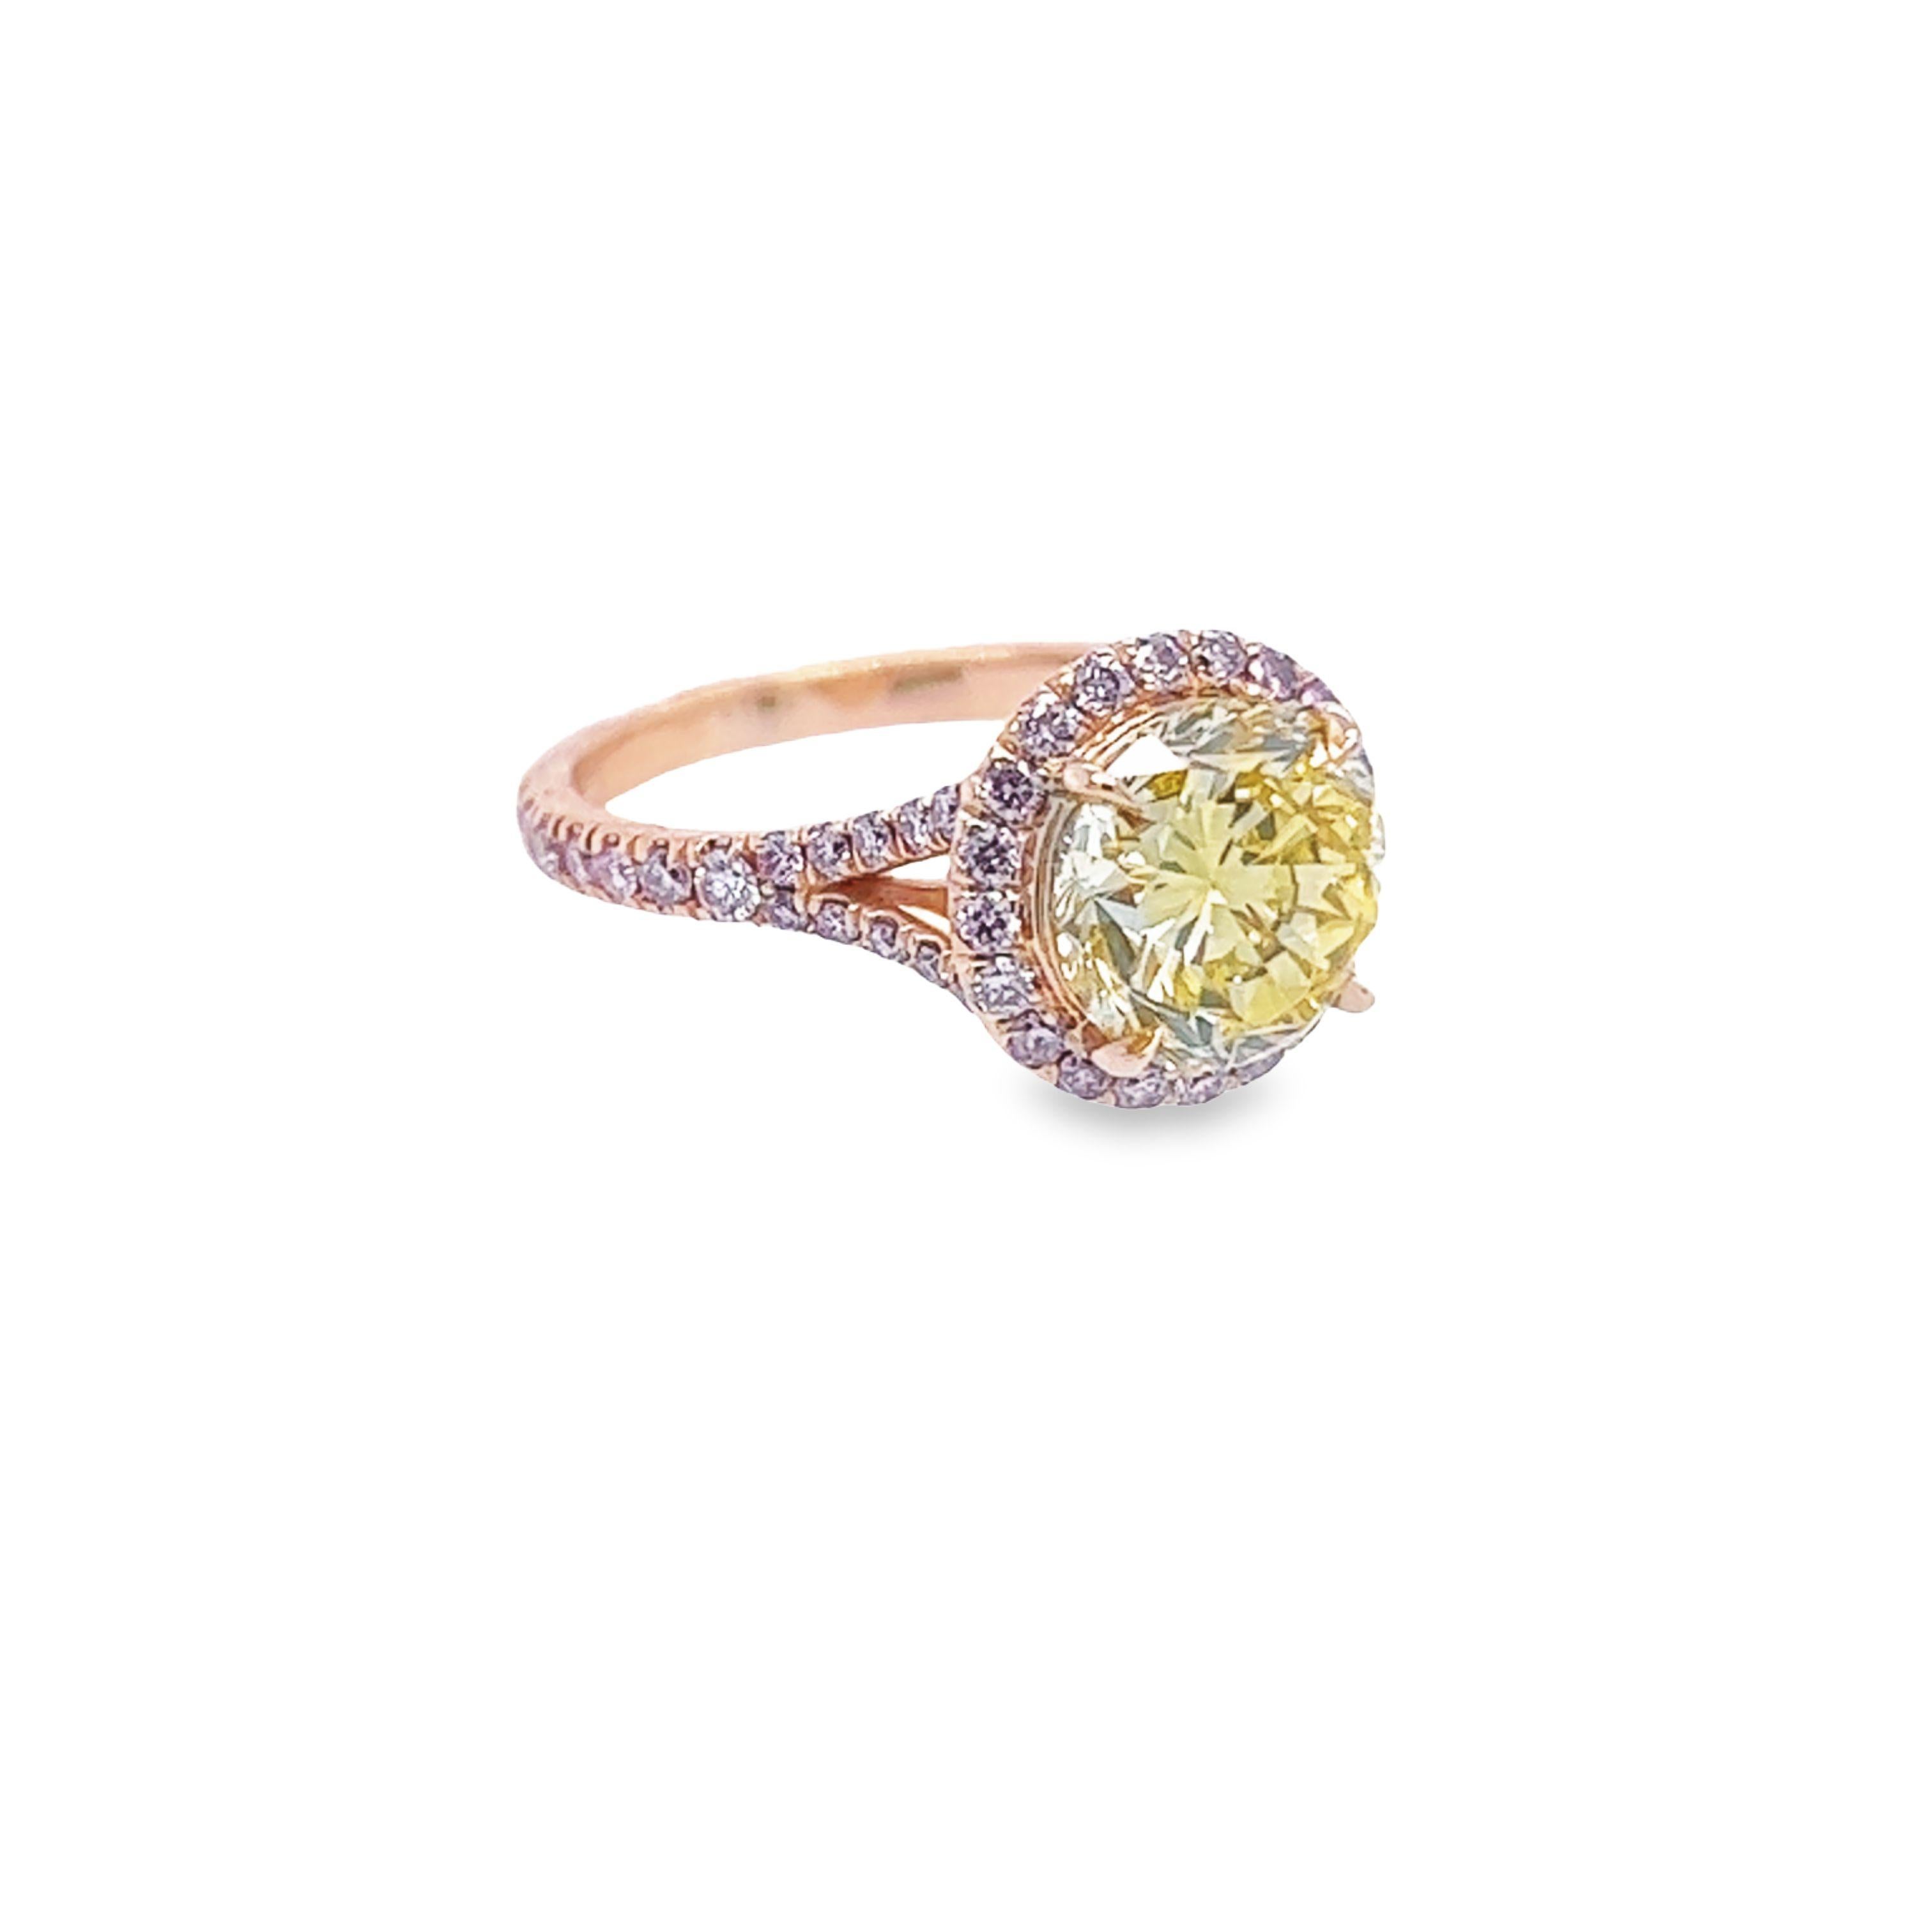 David Rosenberg 2.61 Carat Round Fancy Vivid Yellow GIA Diamond Engagement Ring In New Condition For Sale In Boca Raton, FL